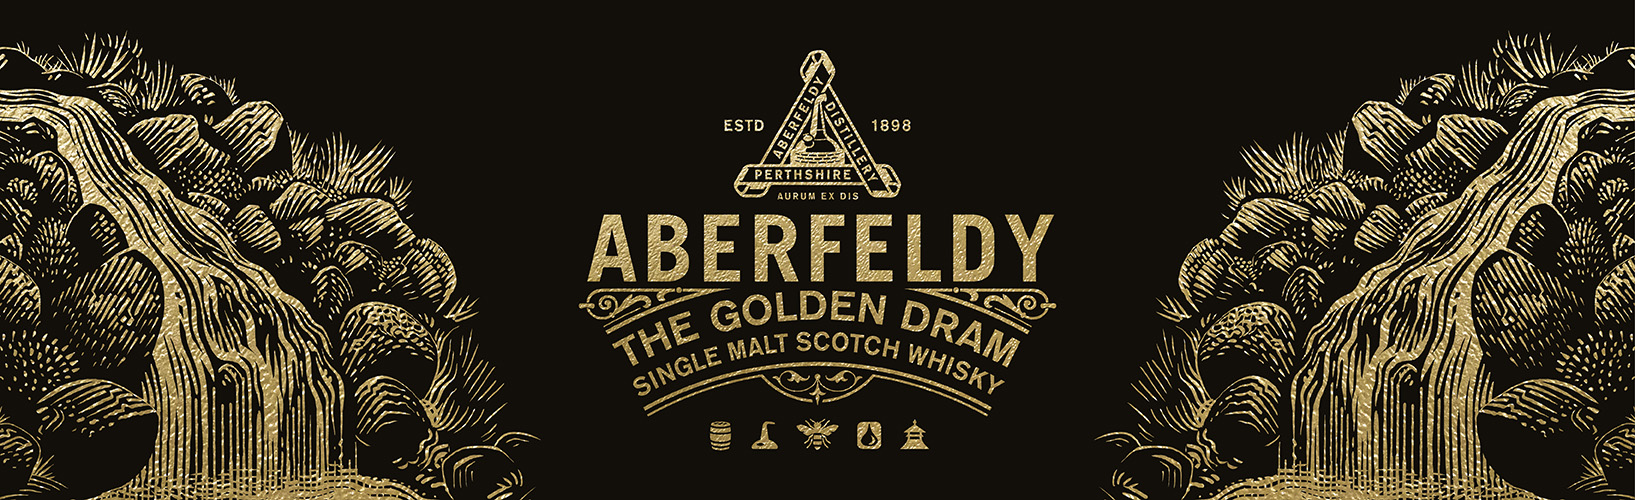 Aberfeldy - Single Malt Scotch Whisky